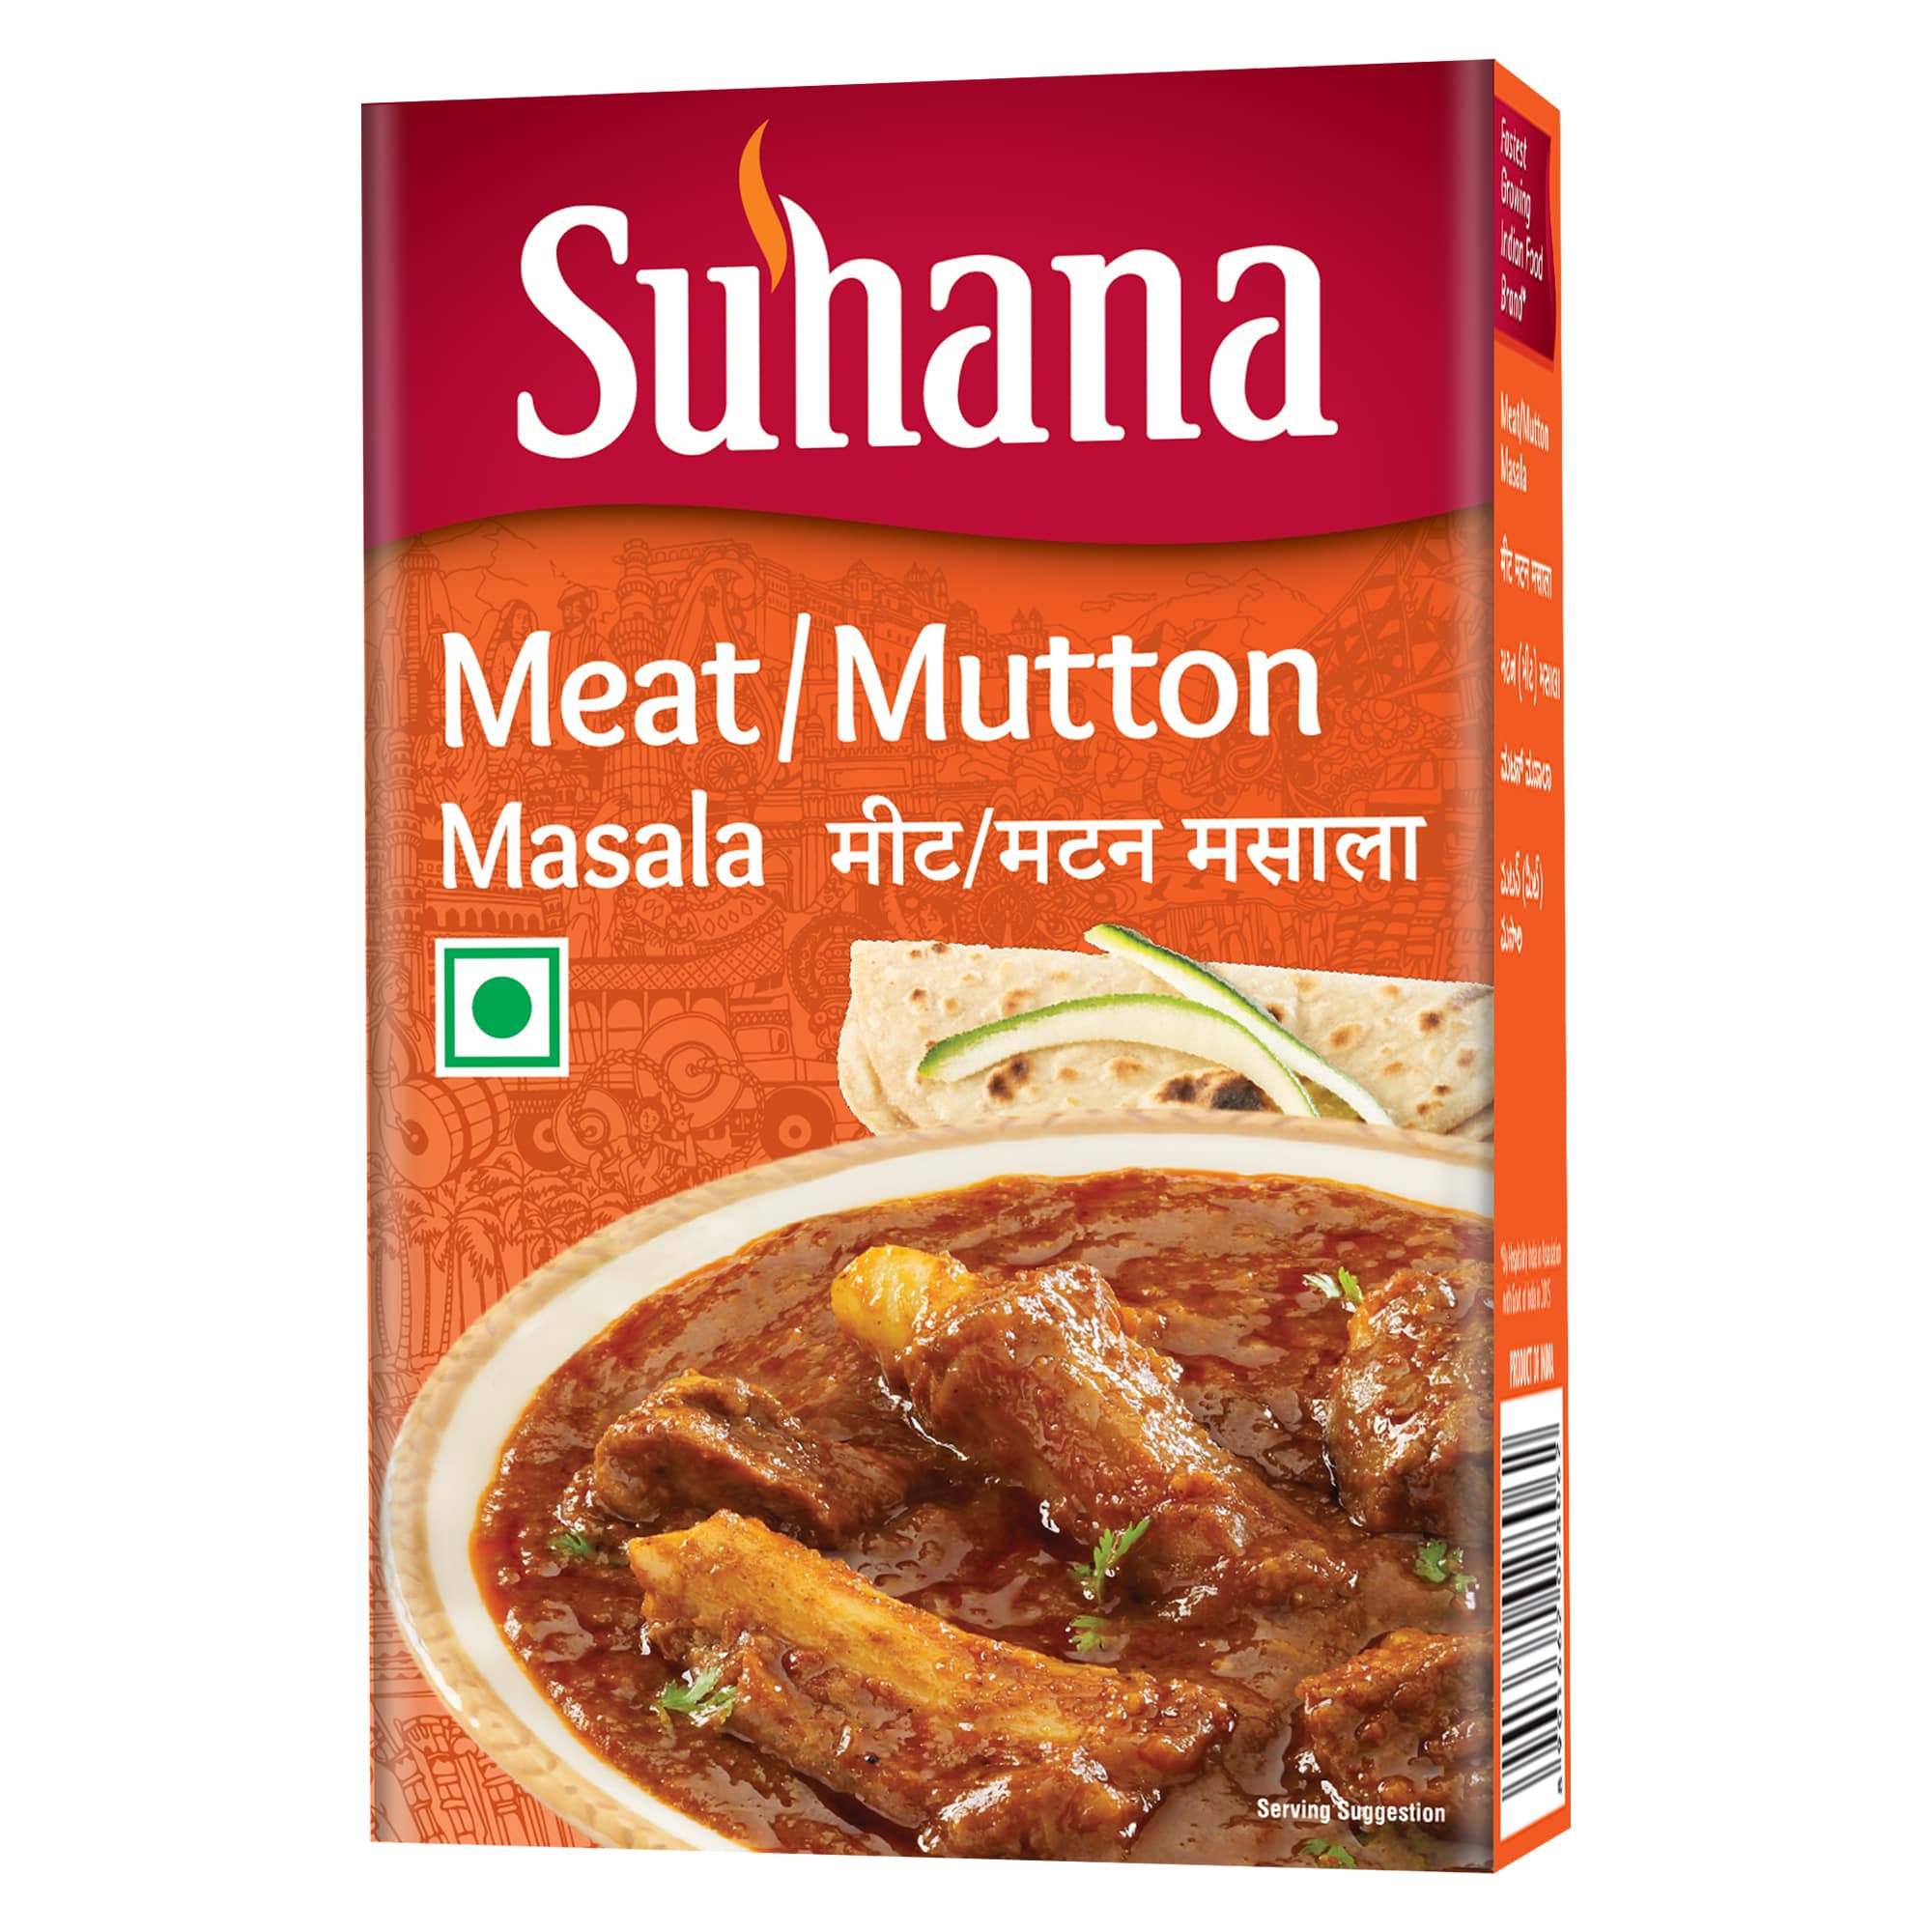 Suhana Mutton (Meat) Masala